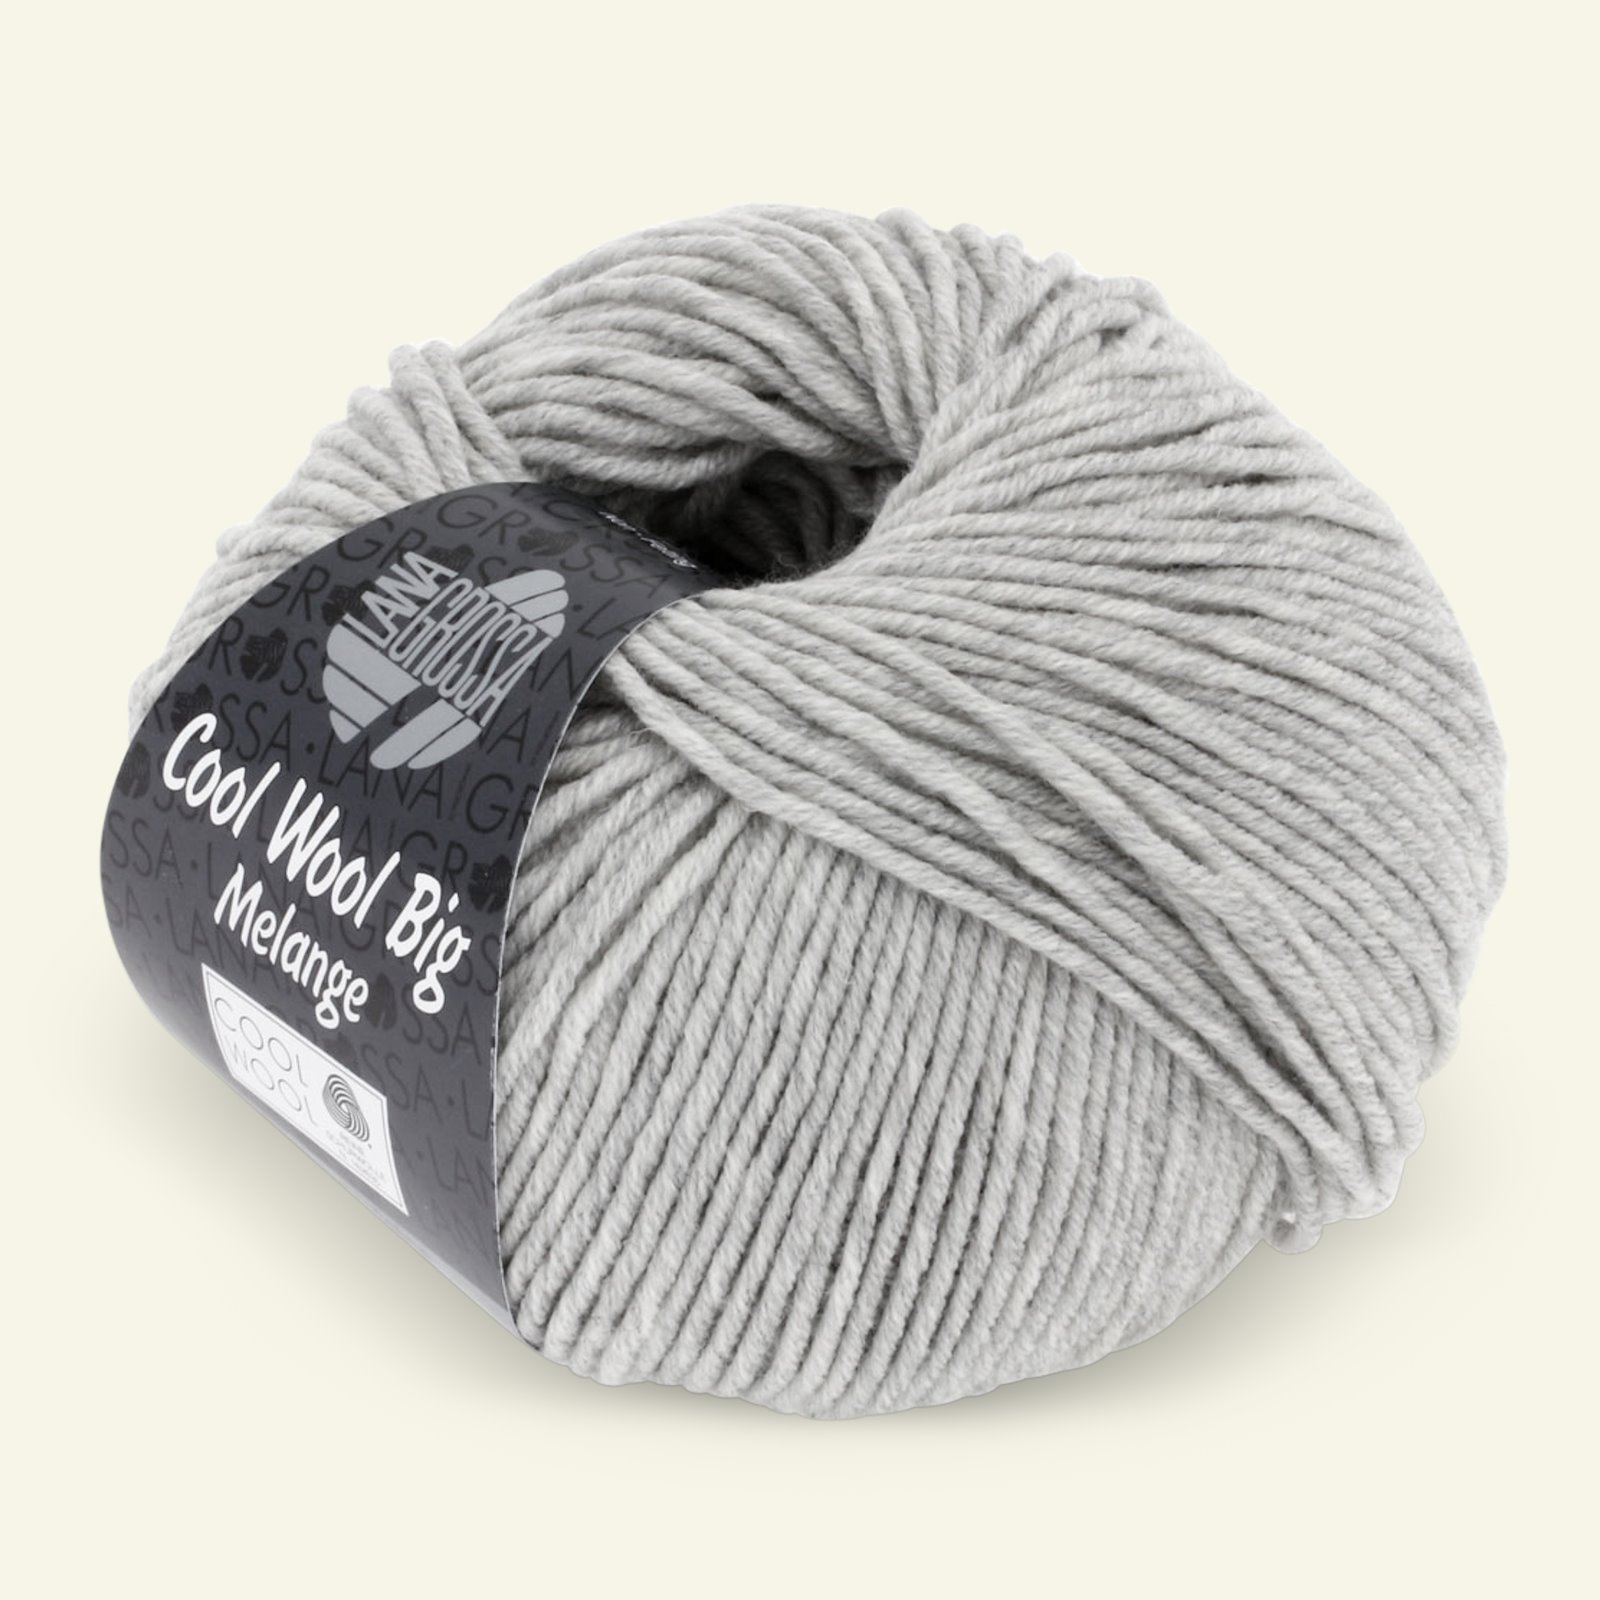 Lana Grossa, Extra feine Merinowolle Garn "Cool Wool Big", Hellgrau mel. 90001085_pack